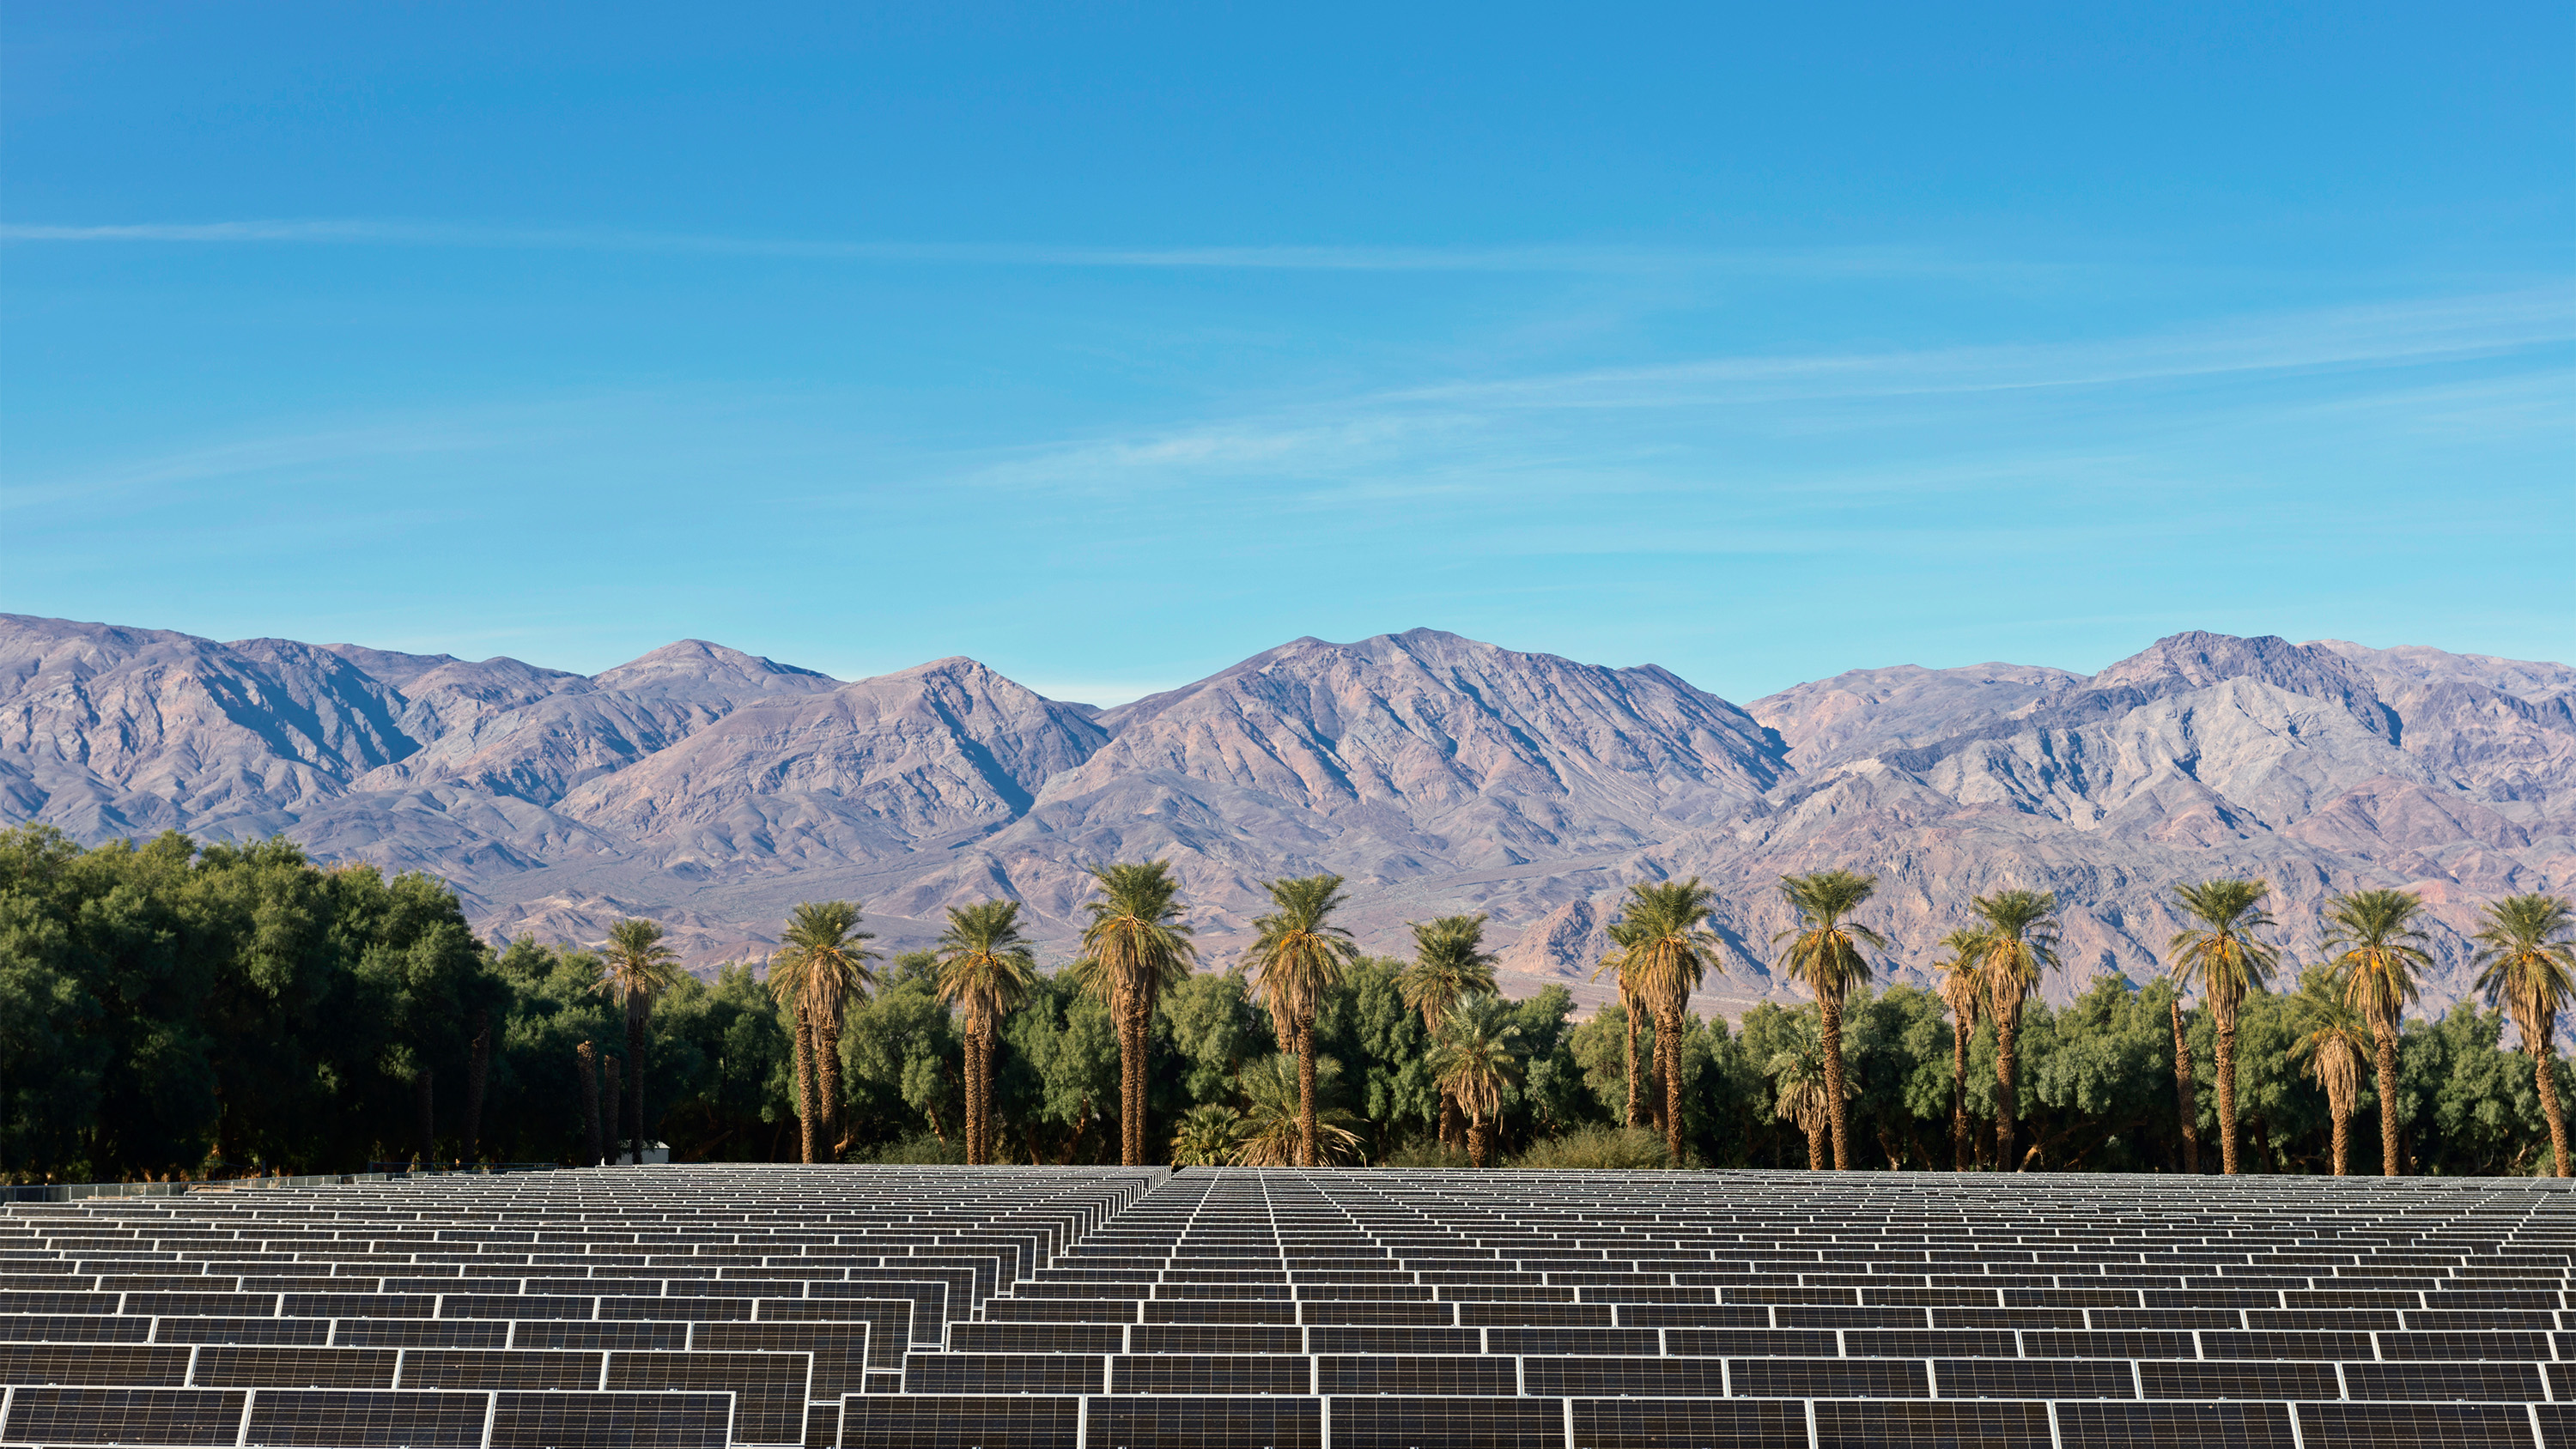 USA, California, Solar Farm at Death Valley